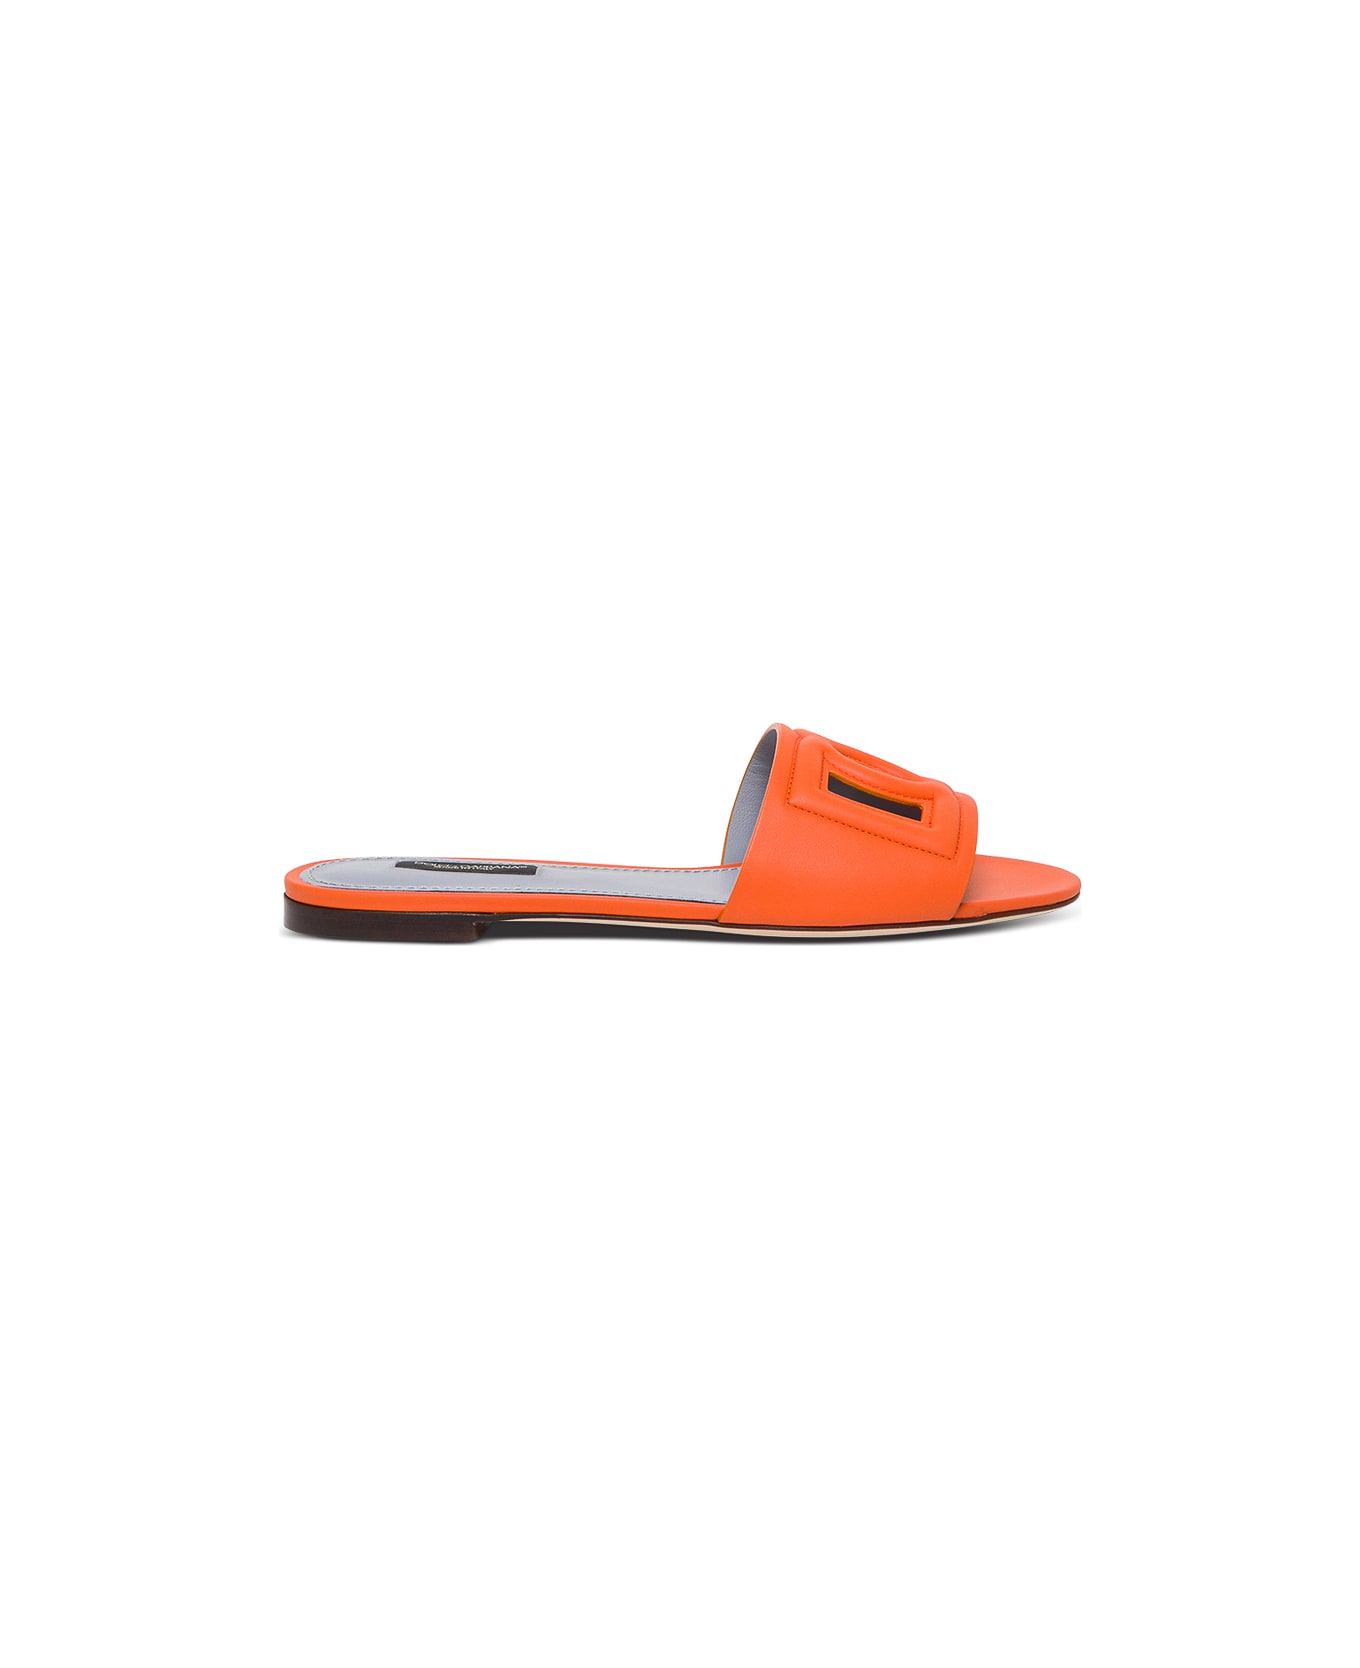 Dolce & Gabbana Slide Sandals In Orange Leather With Logo - Orange サンダル